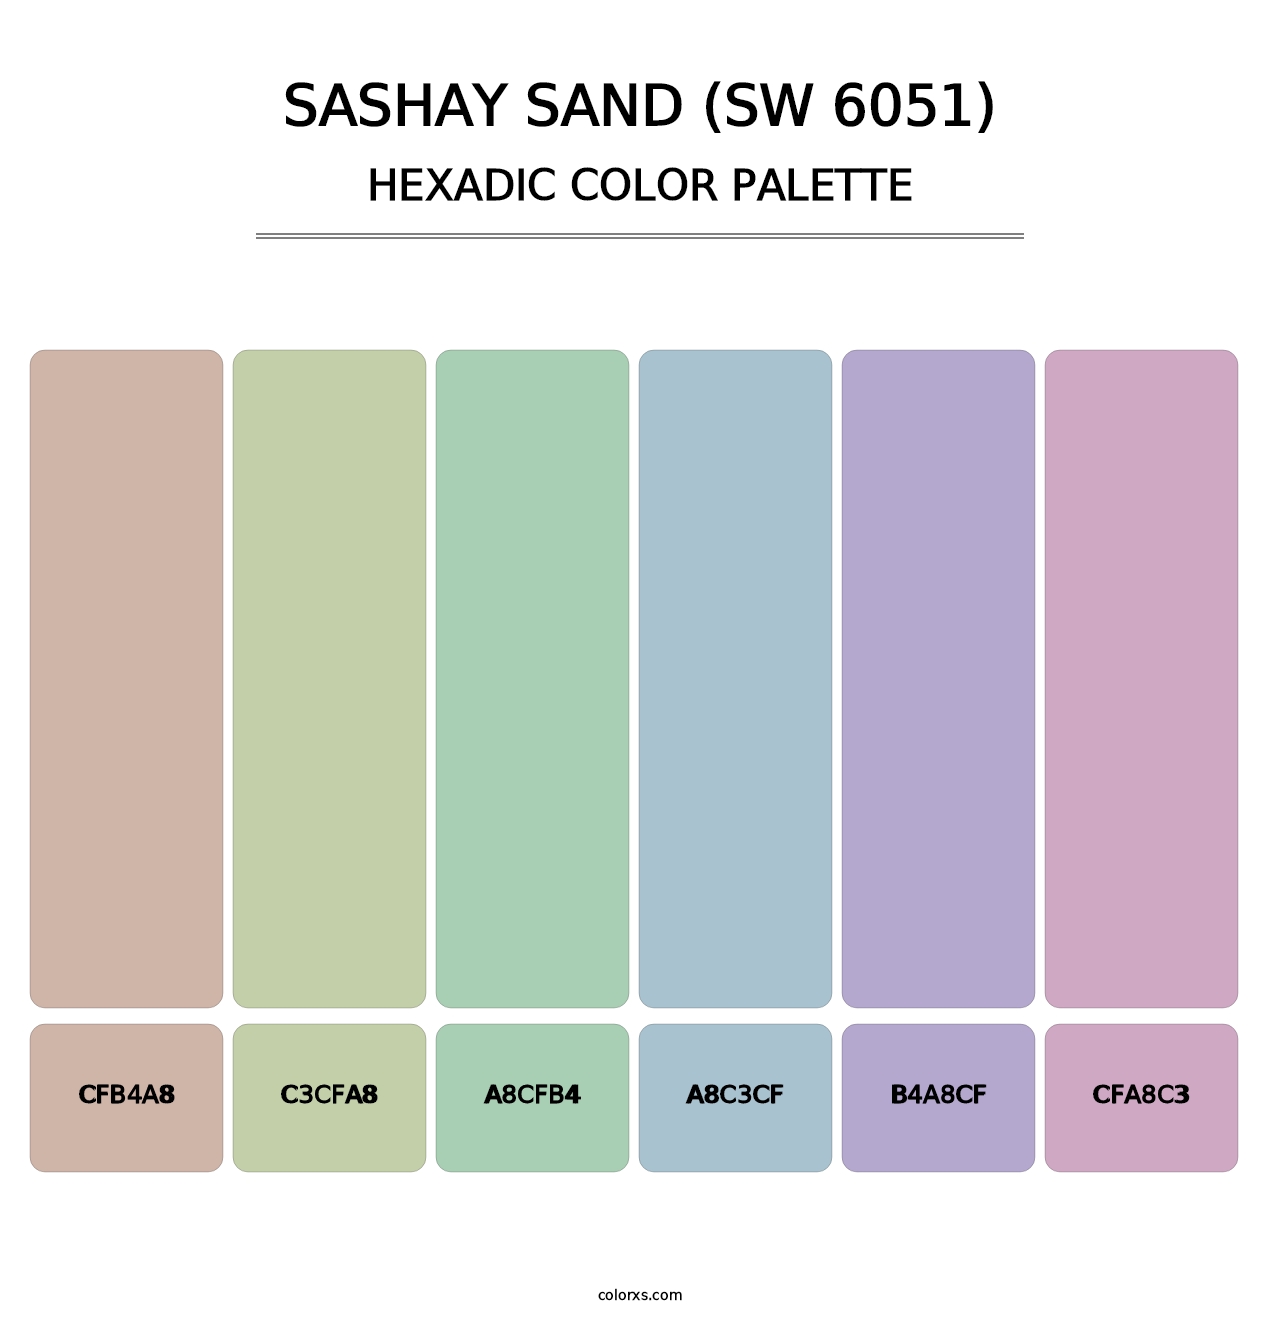 Sashay Sand (SW 6051) - Hexadic Color Palette